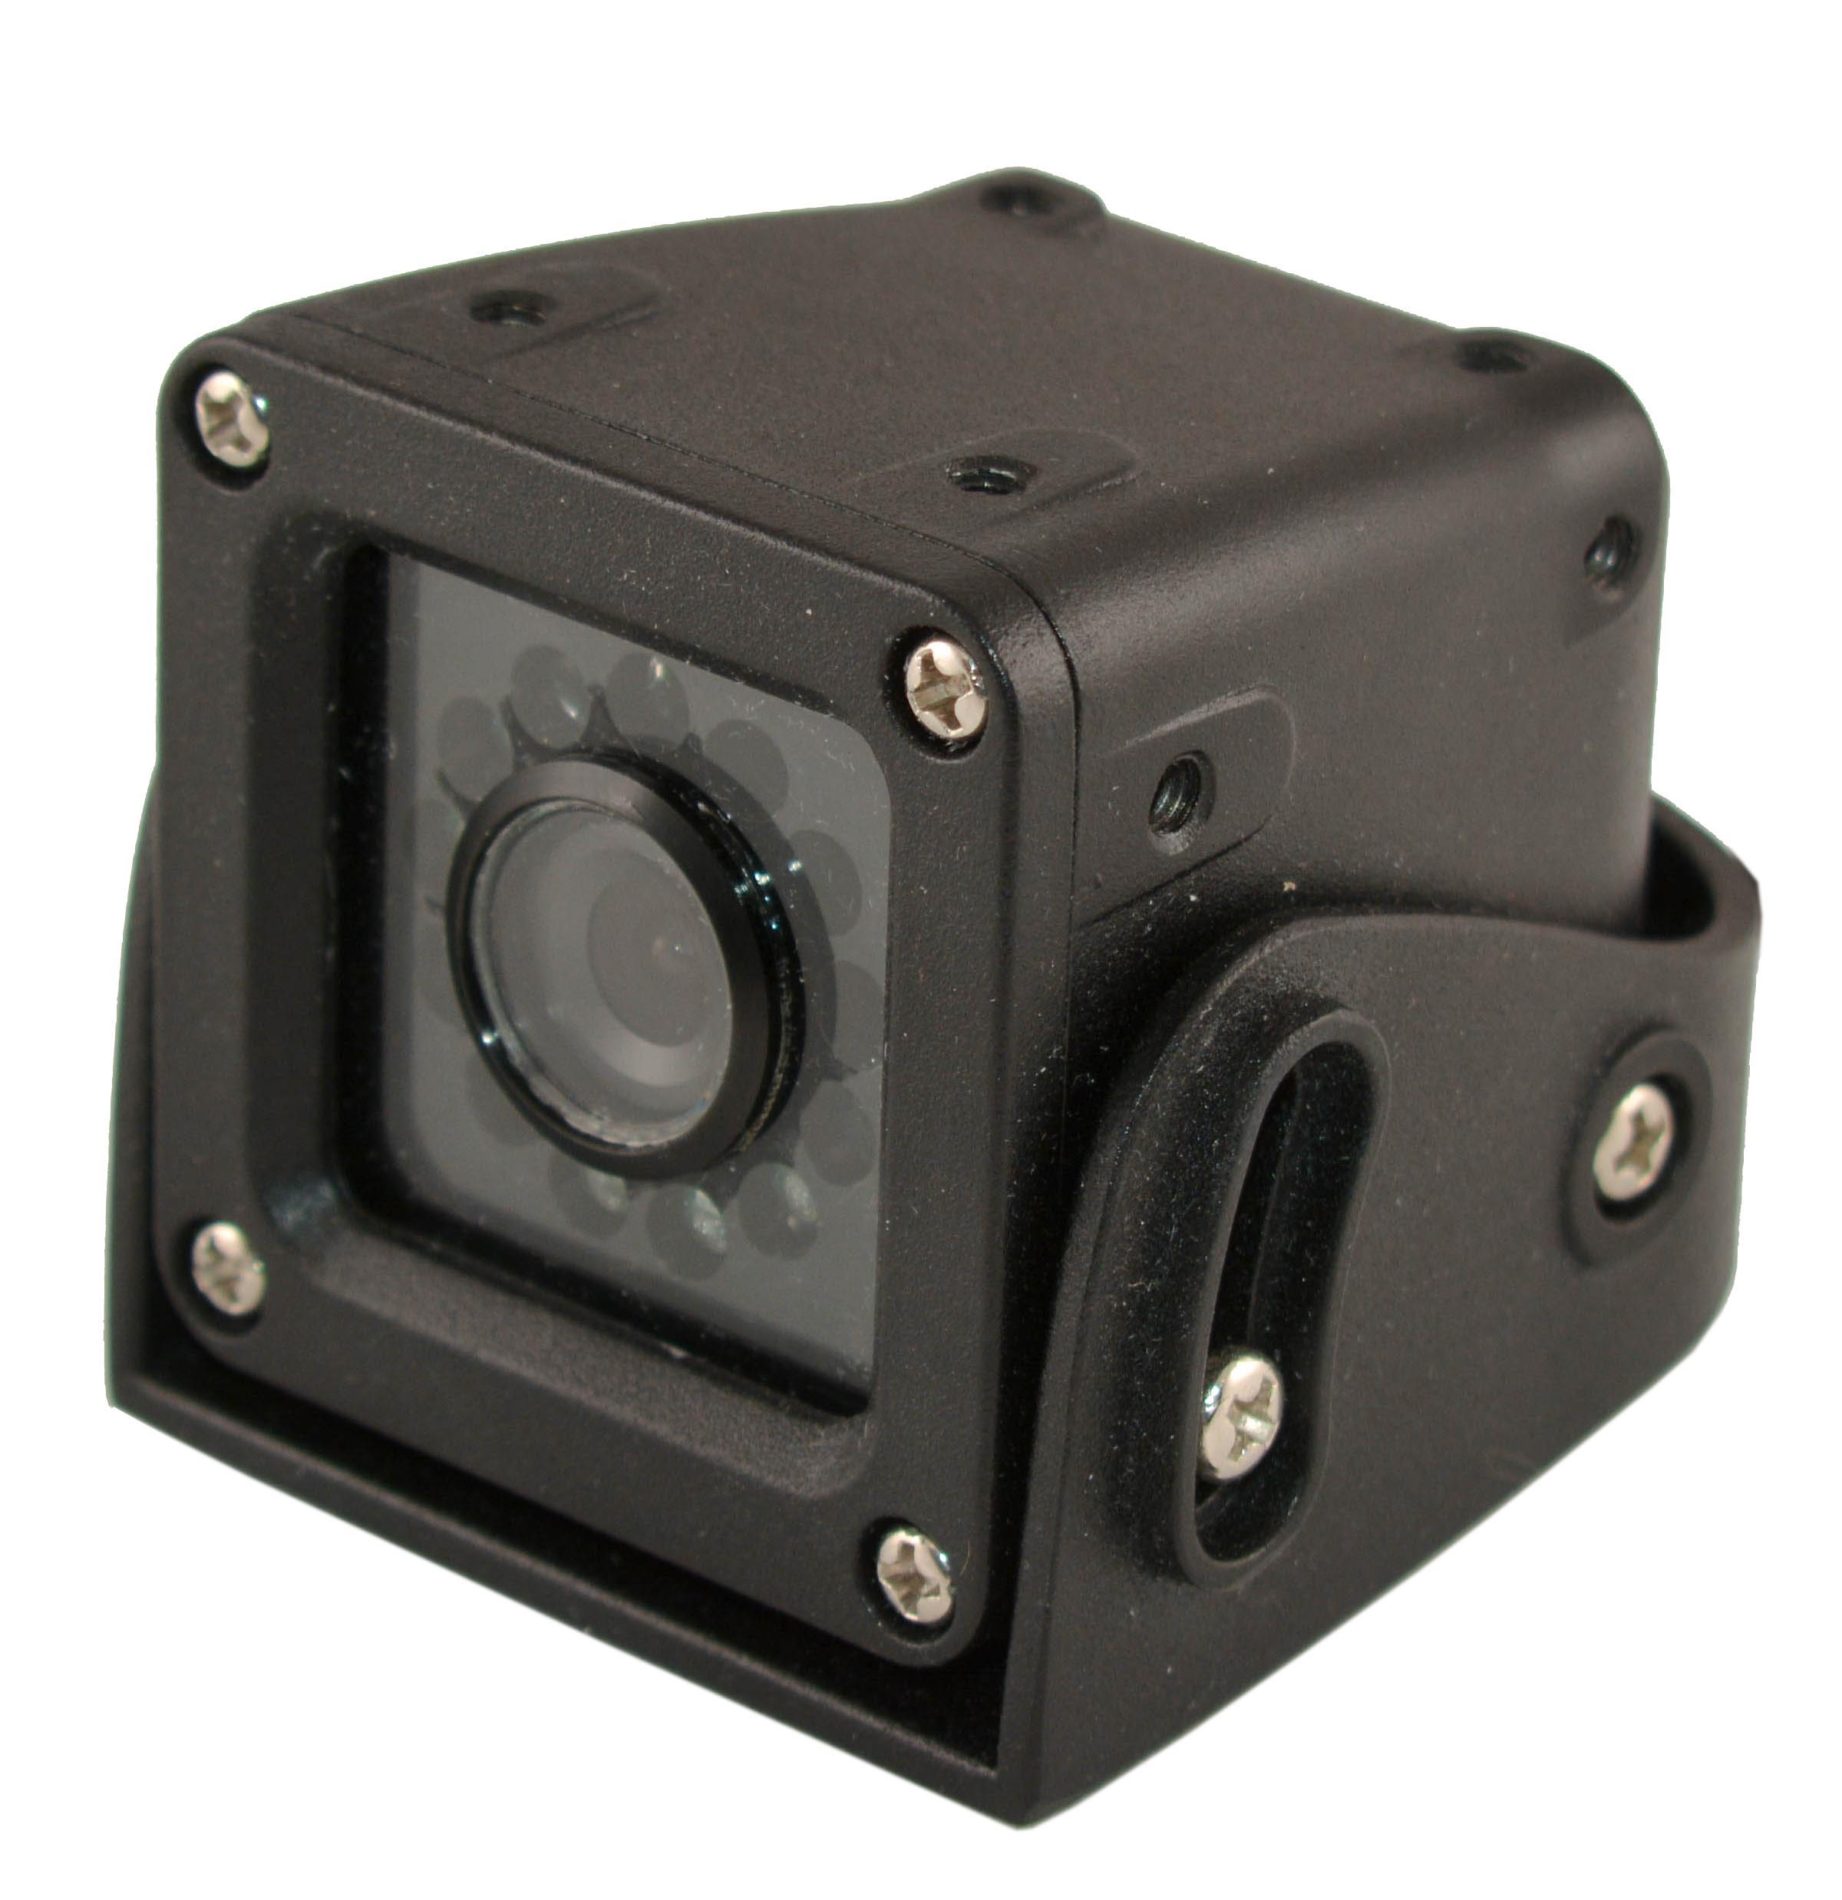 MC999 Side camera